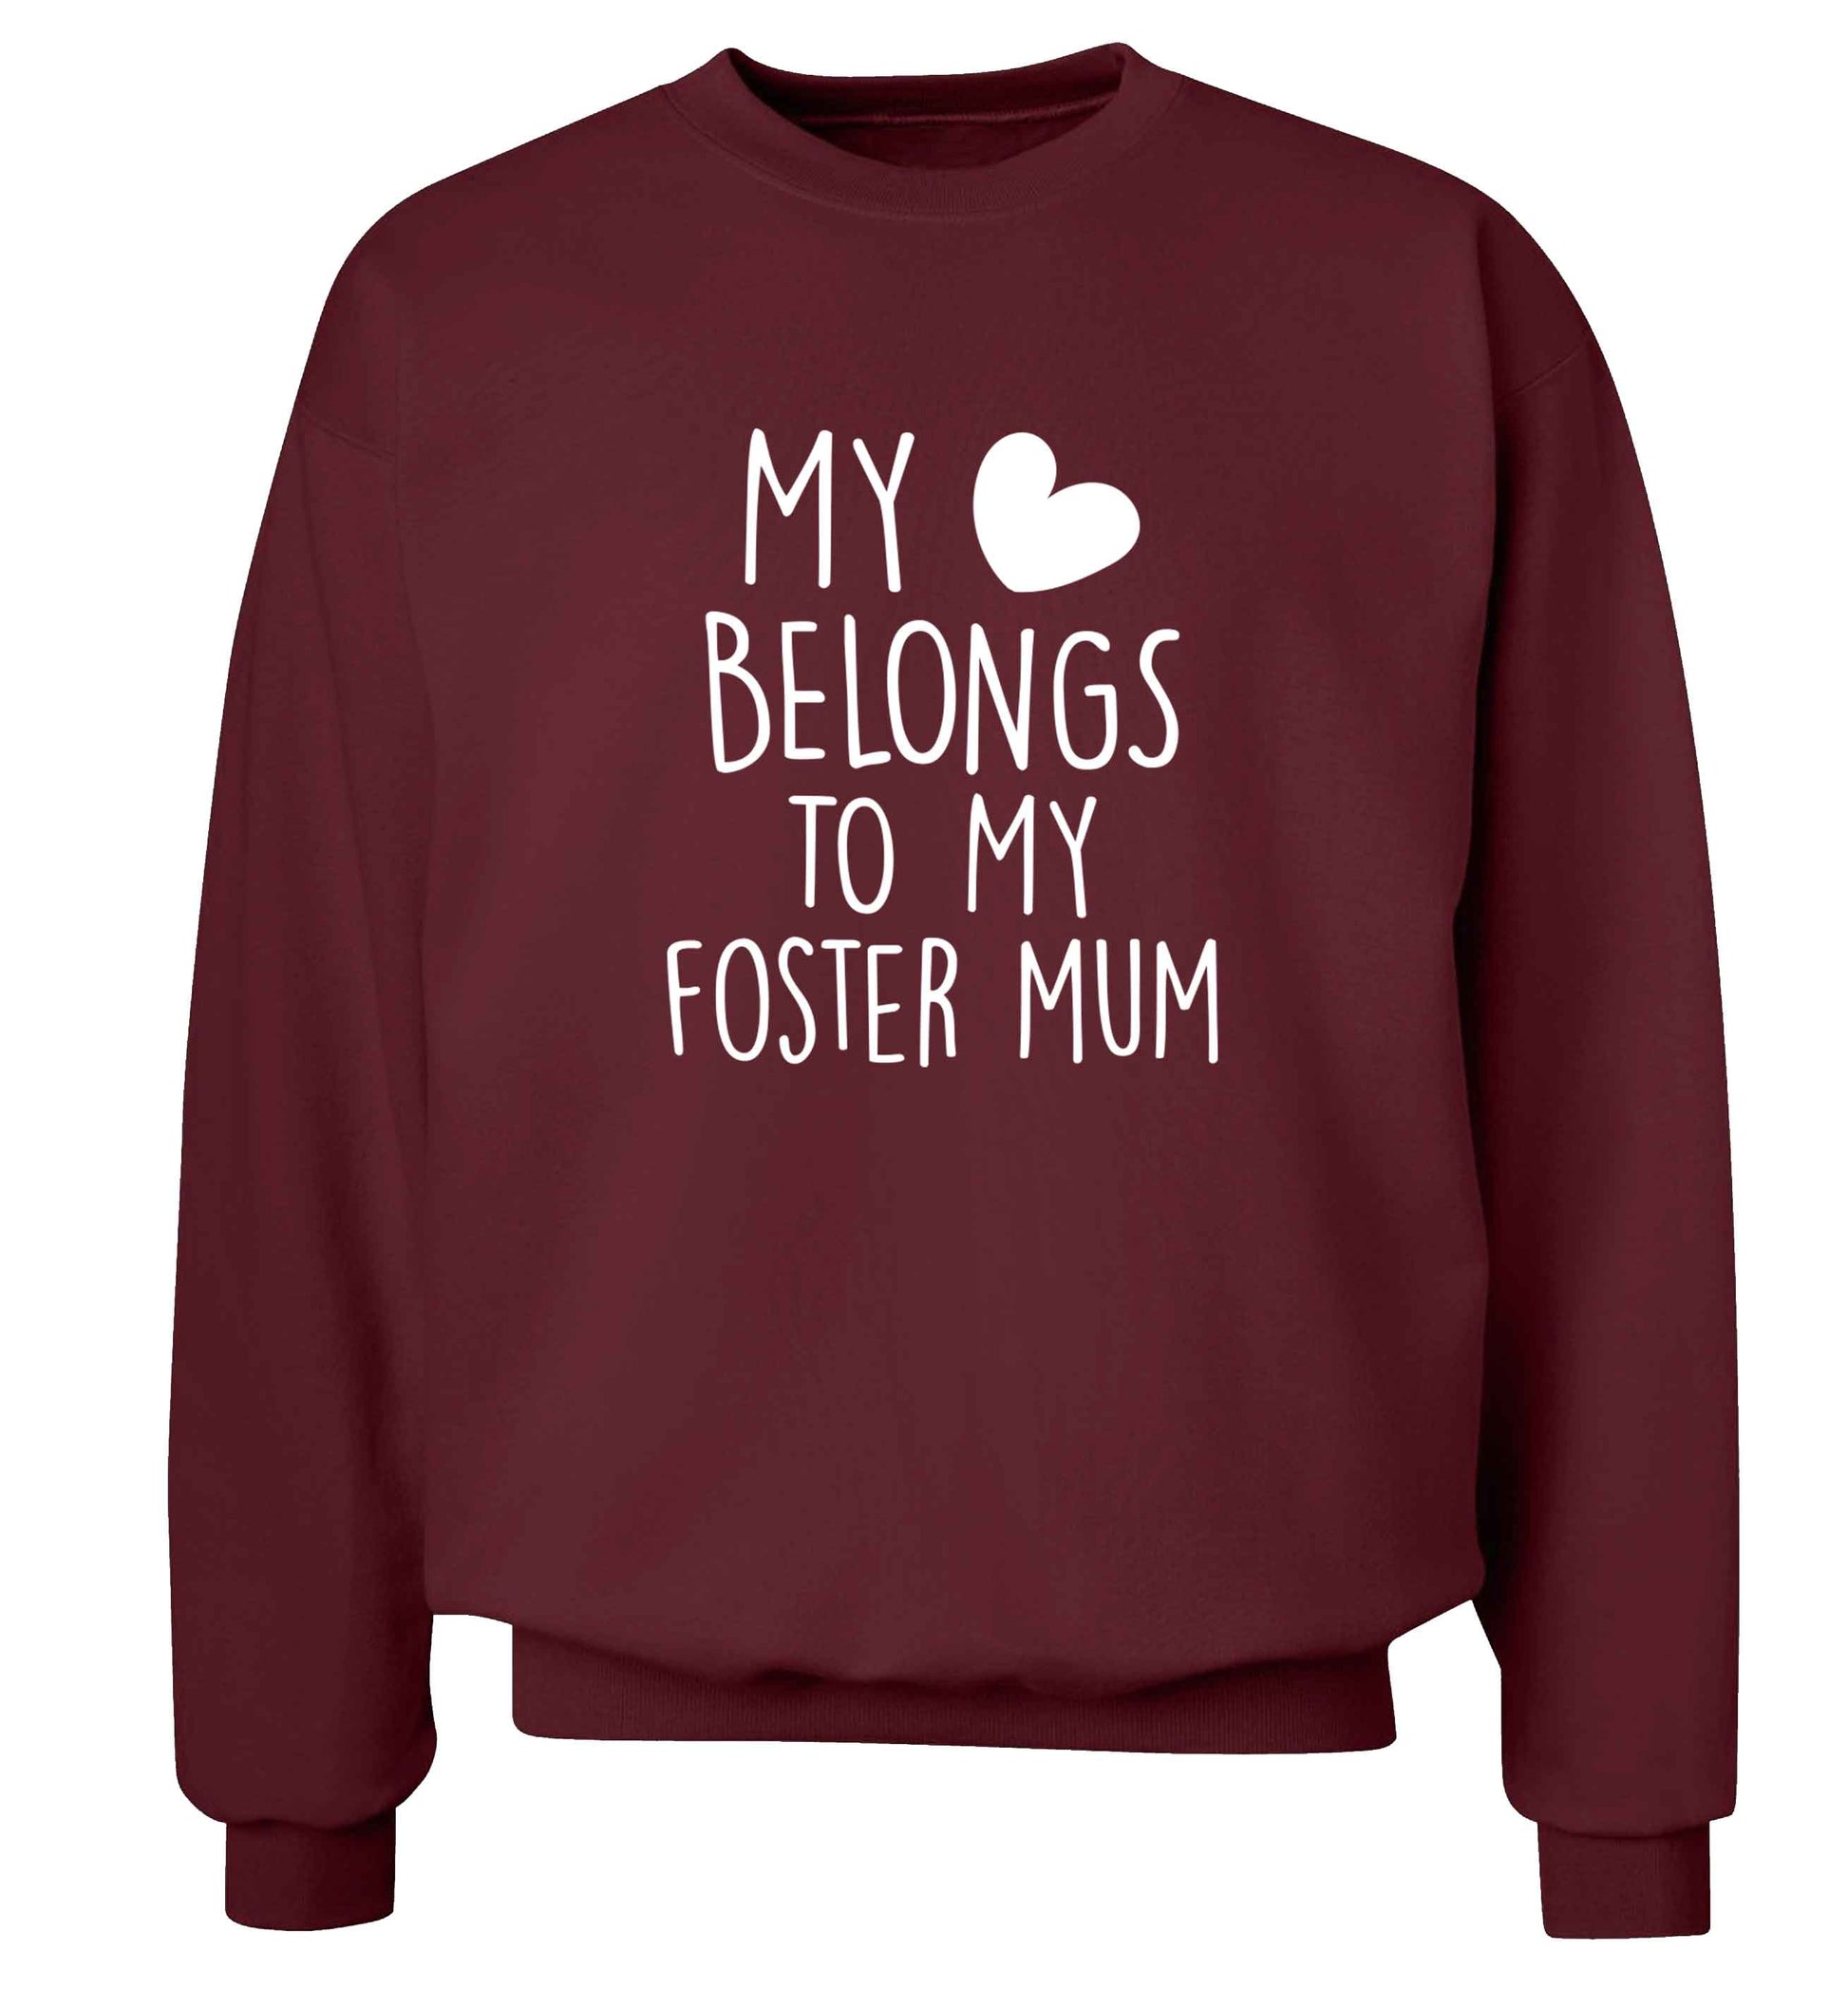 My heart belongs to my foster mum adult's unisex maroon sweater 2XL